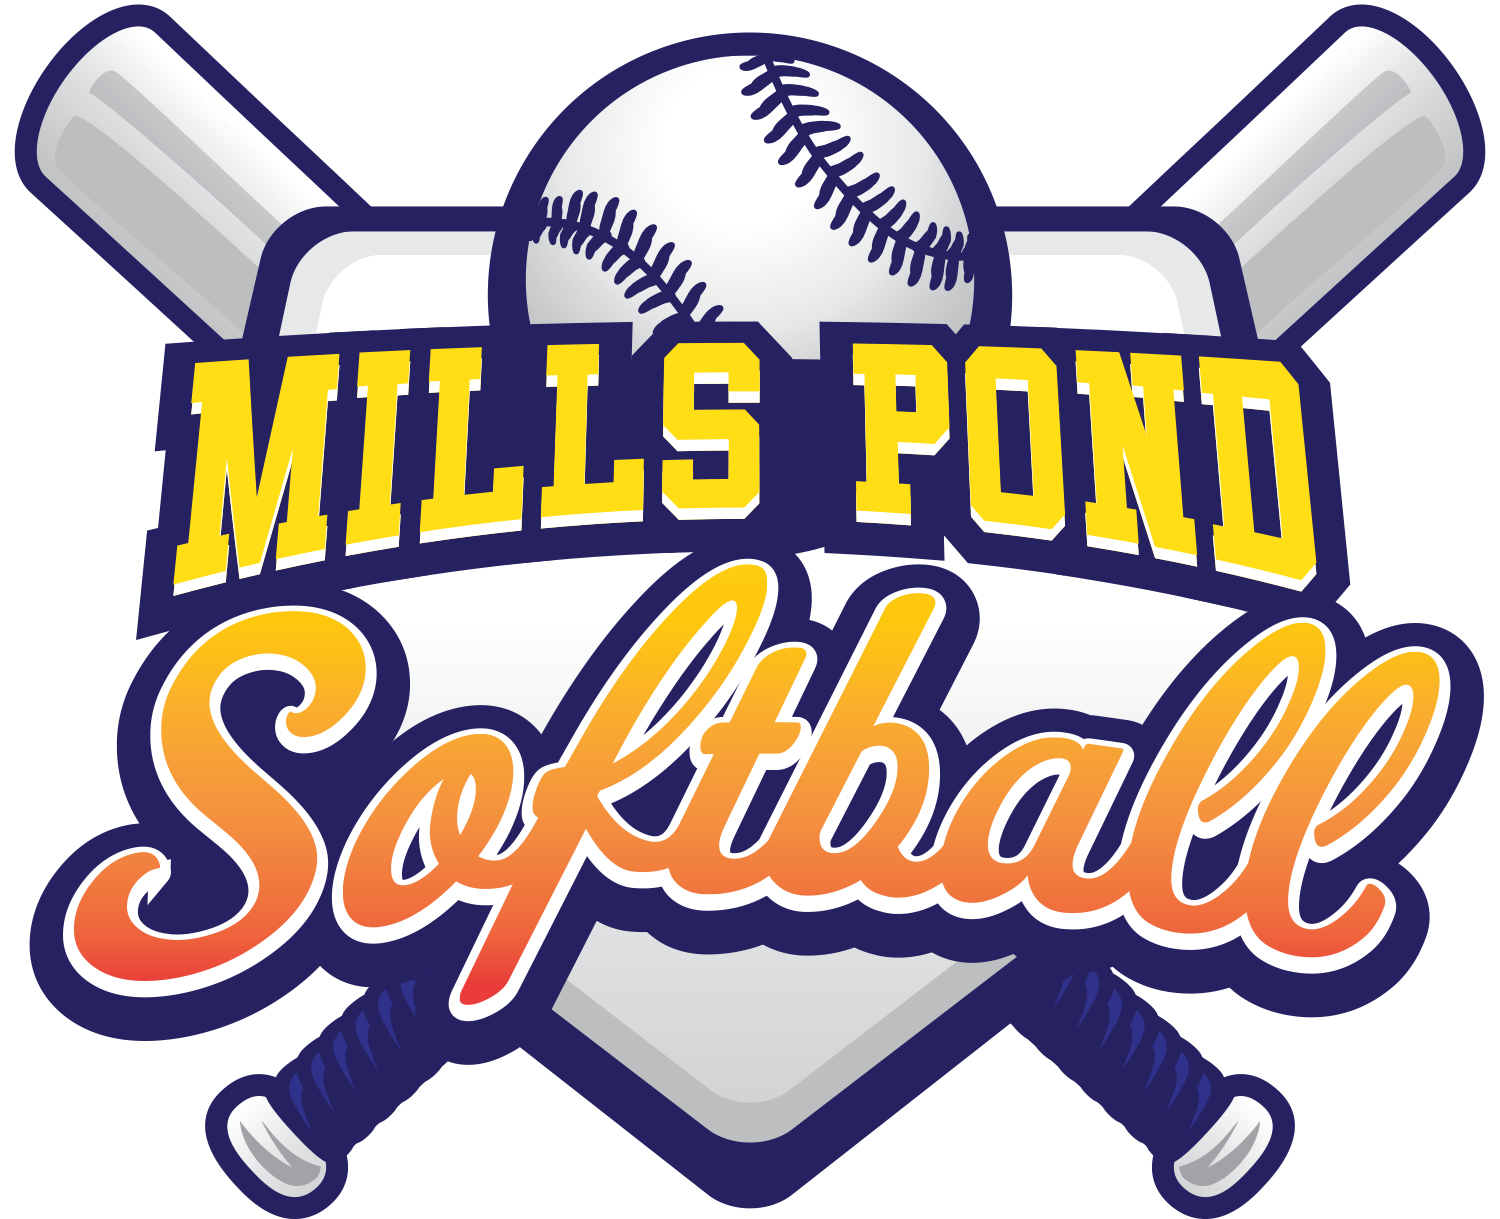 Mills Pond Softball